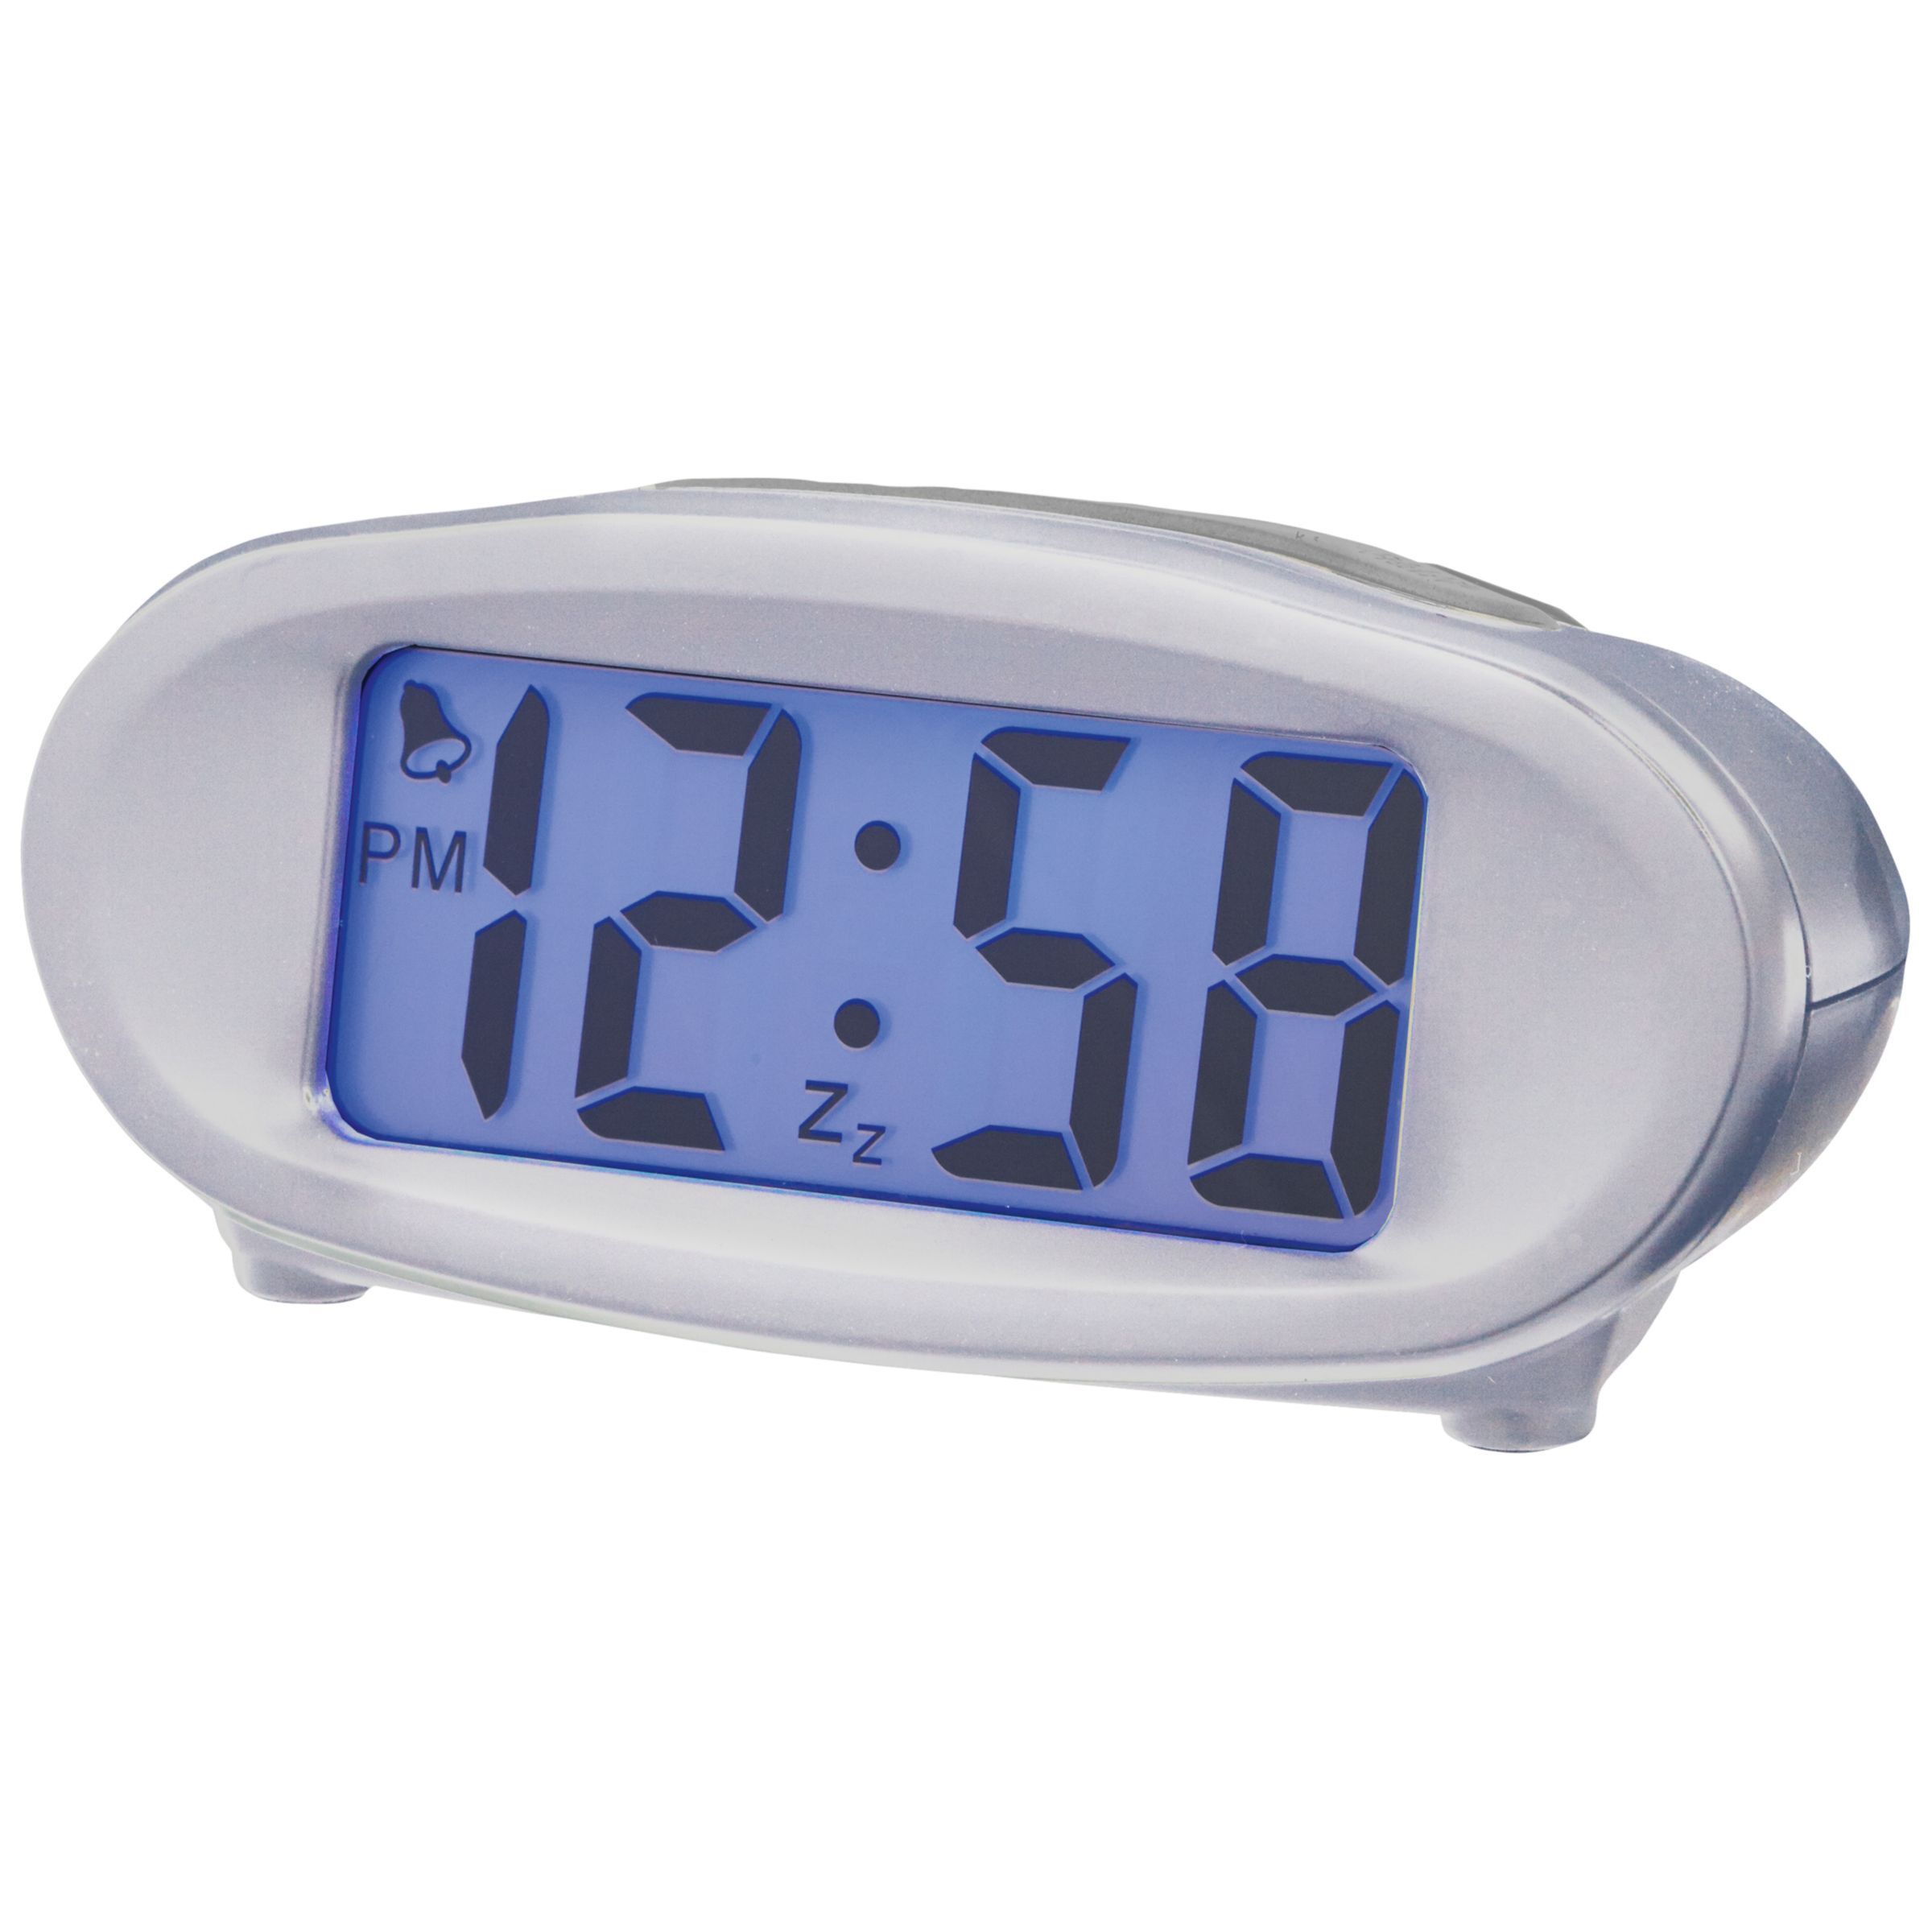 Acctim Eclipse Solar Dual Power Smartlite® Digital Alarm Clock, Silver - image 1